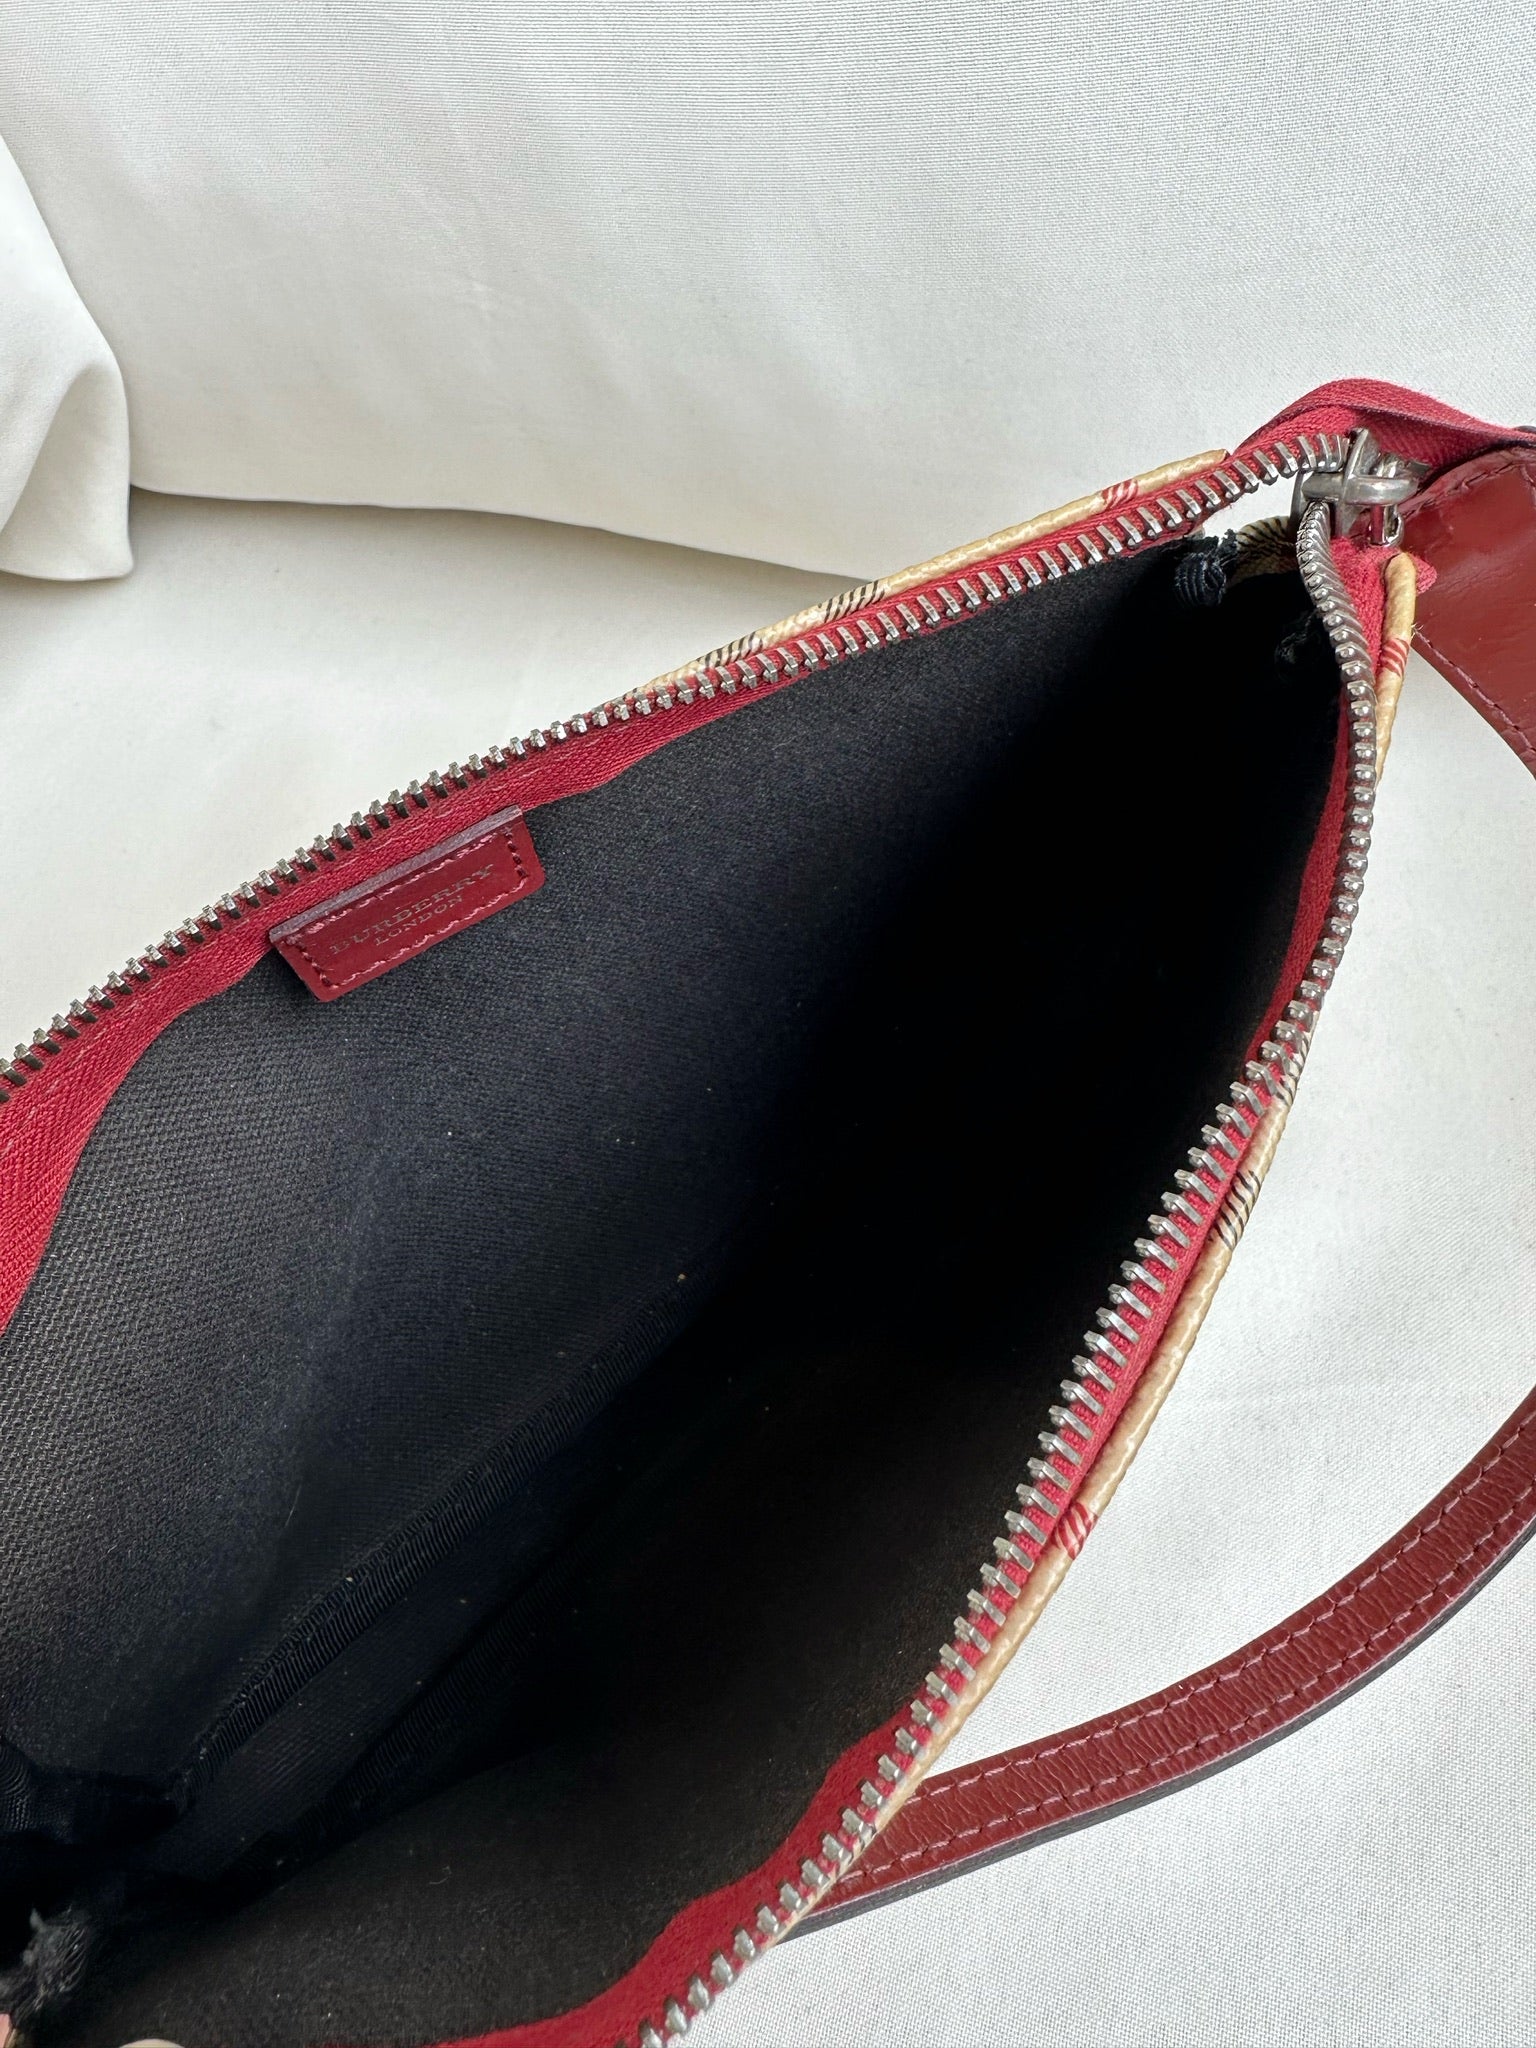 Vintage Burberry Pochette handbag, Nova check and red leather at